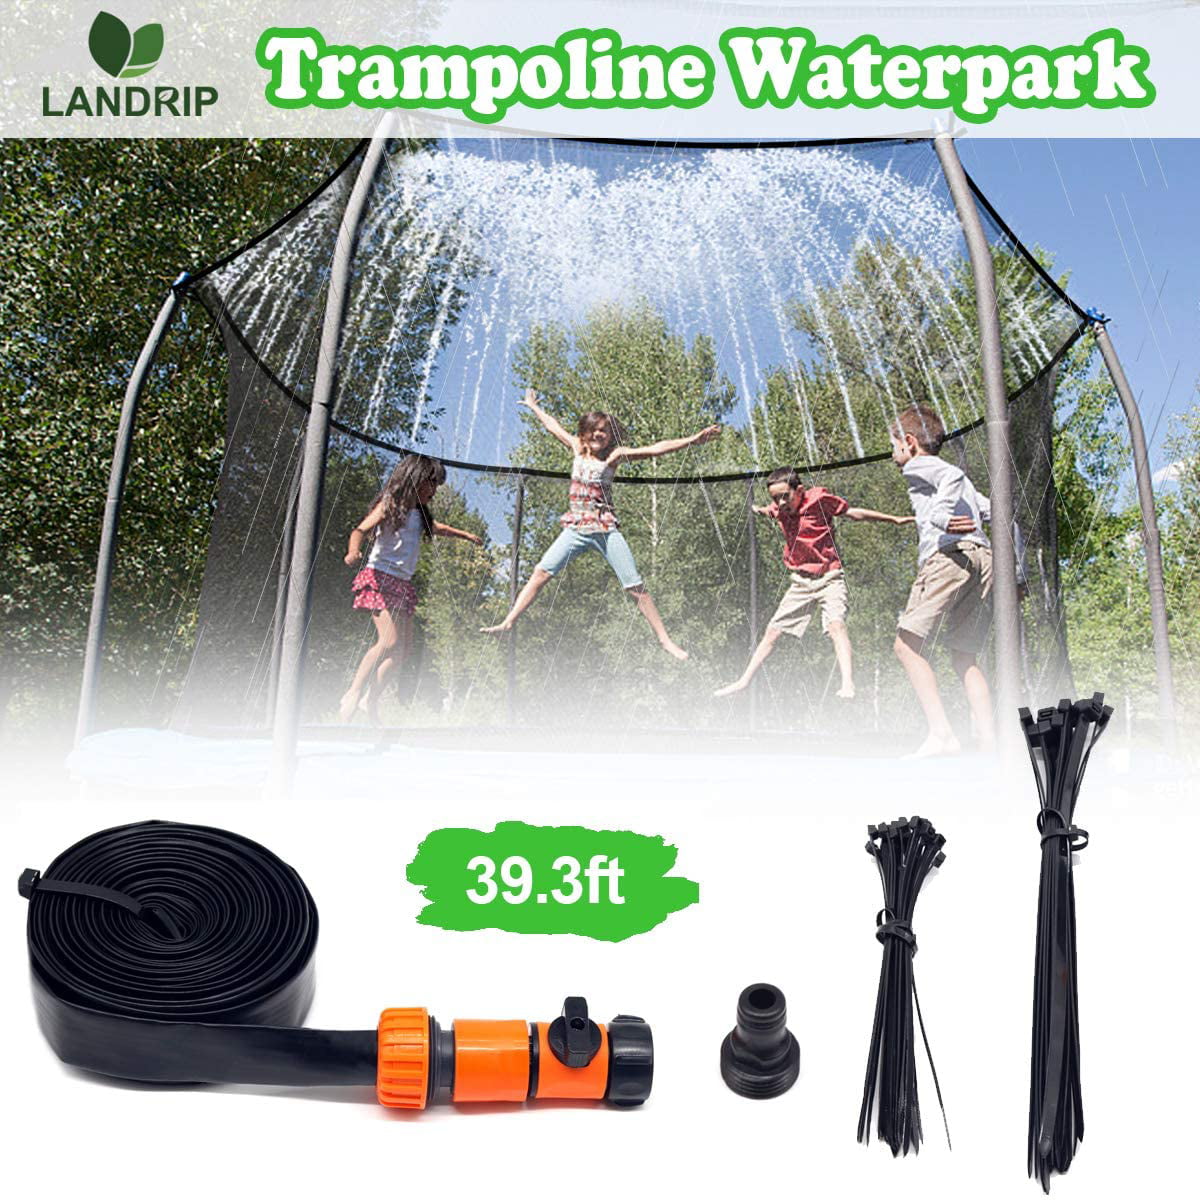 Trampoline Sprinklers for Kids Trampoline Spray Water Park Fun Summer Water USA 